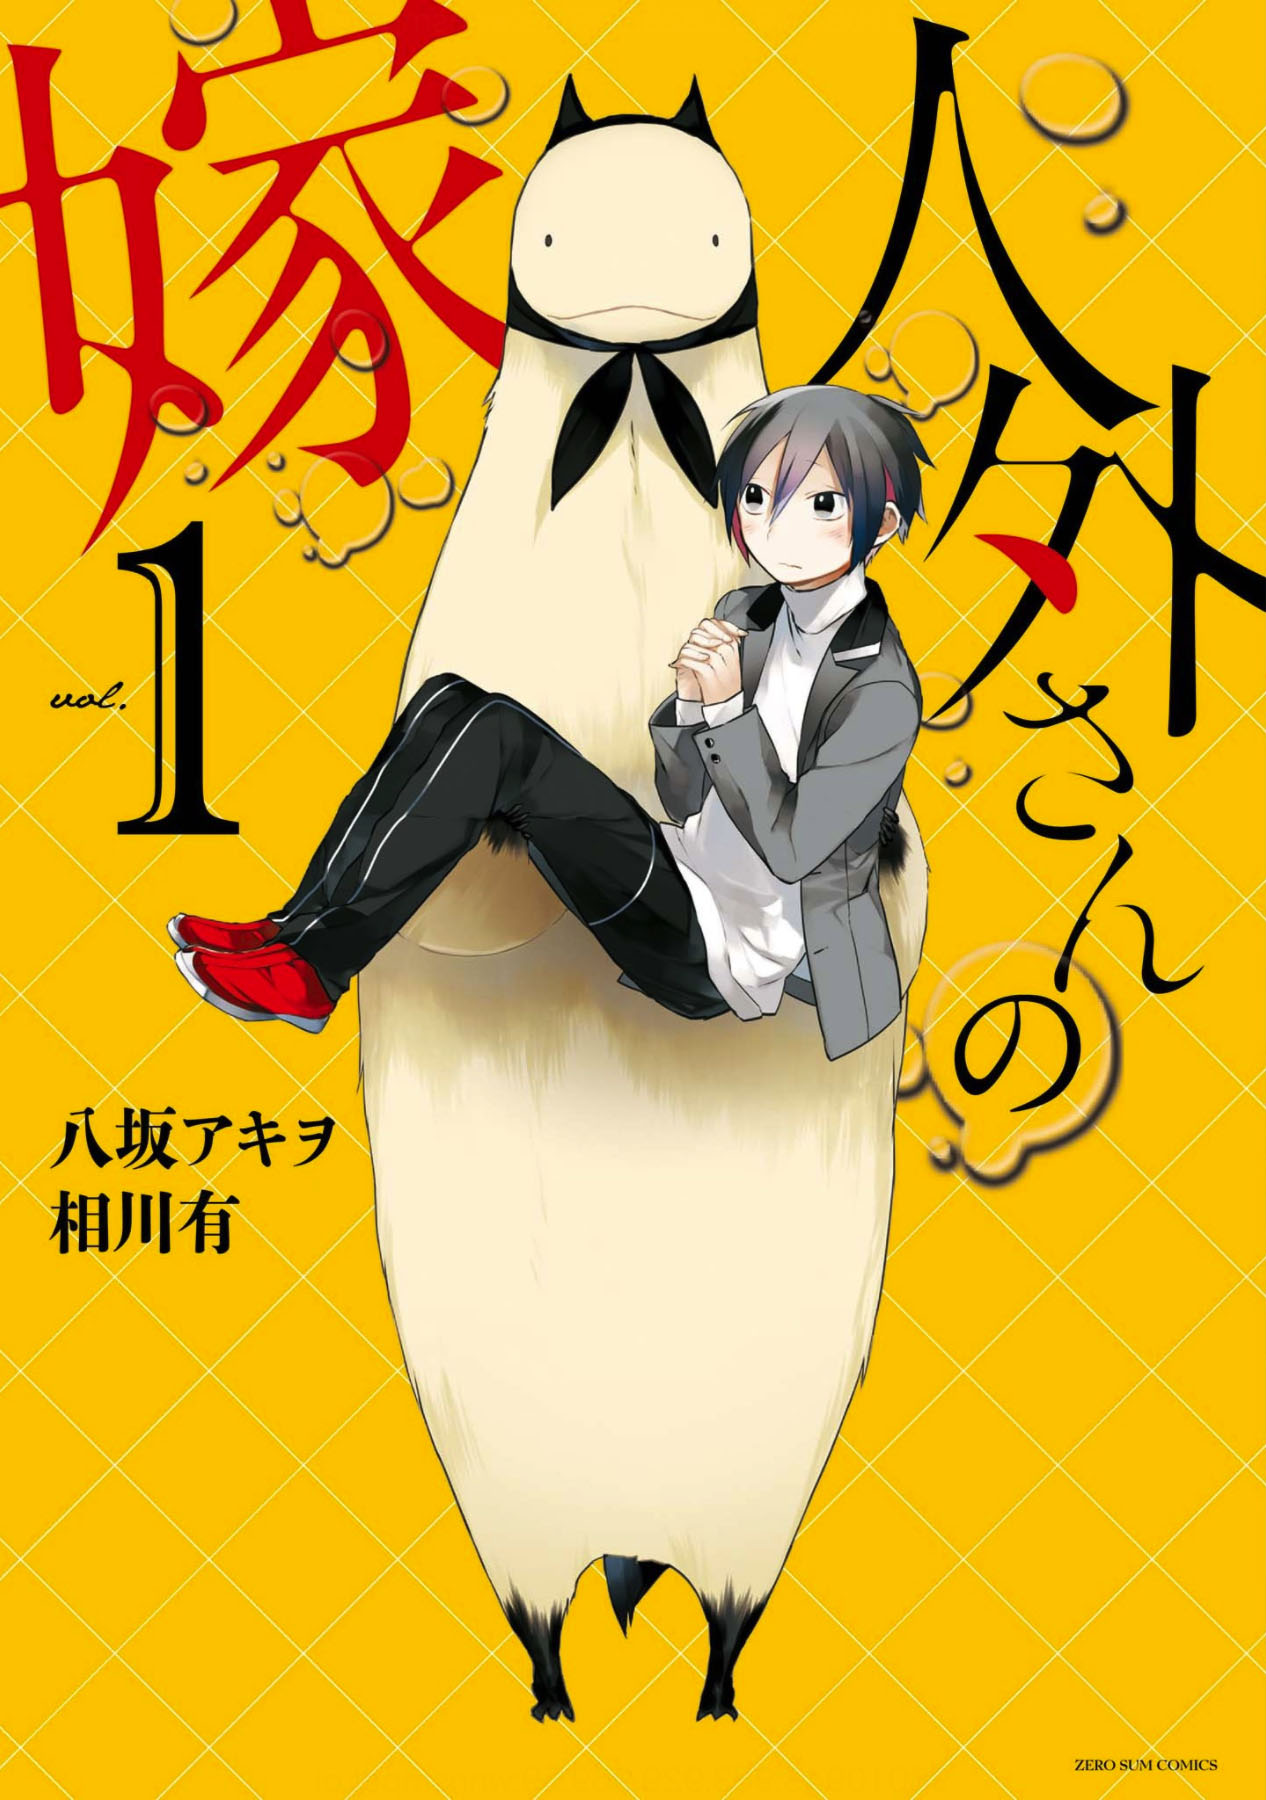 Jingai san no yome manga online